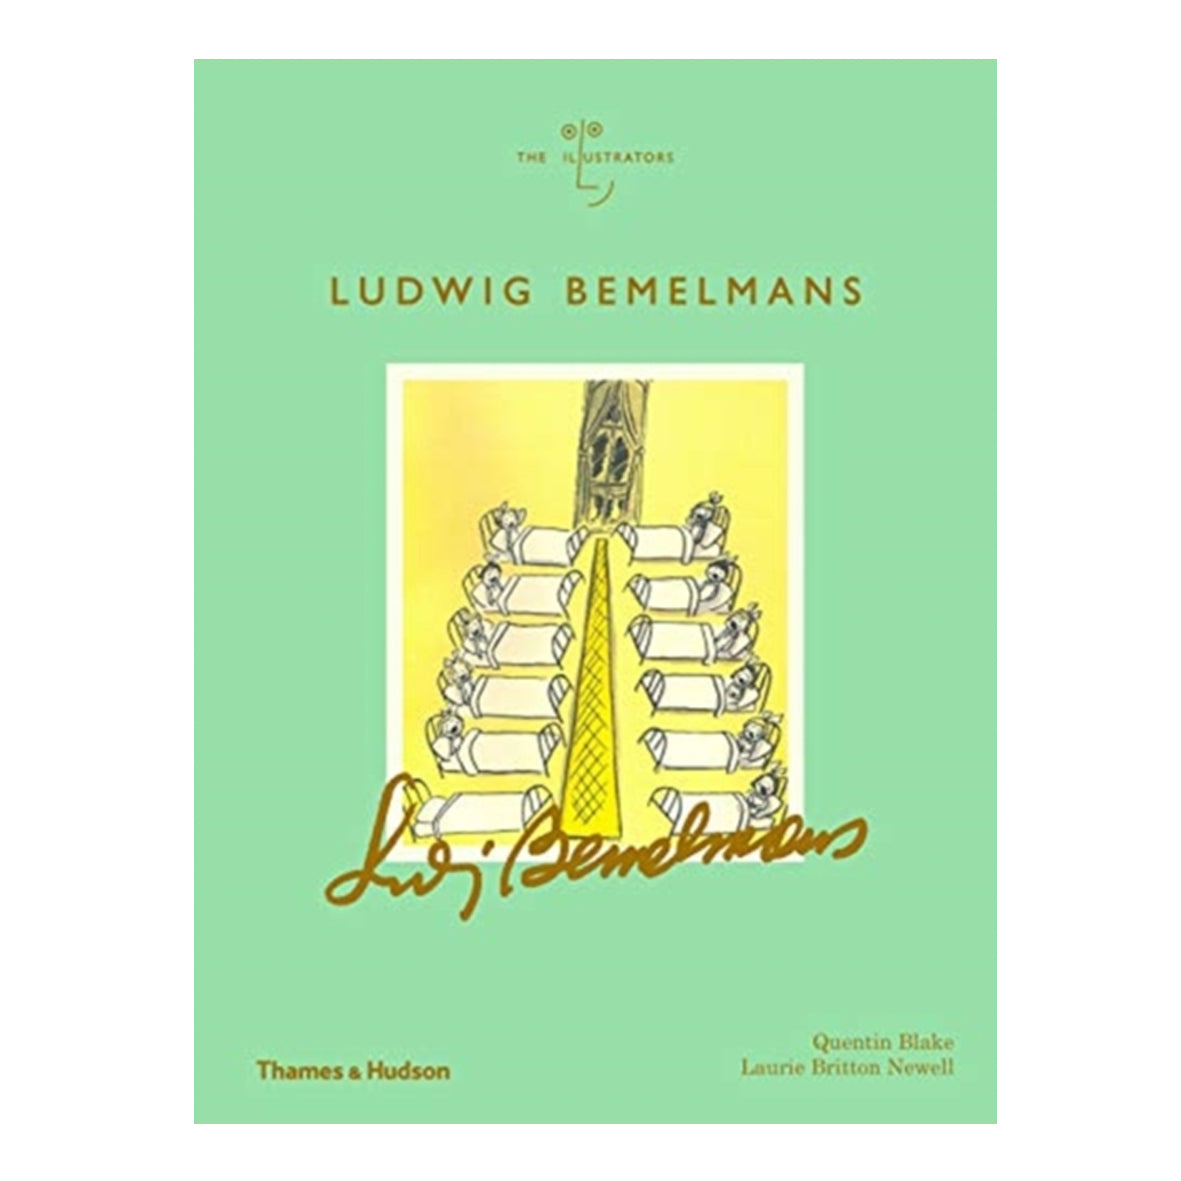 Book - Ludwig Bemelmans